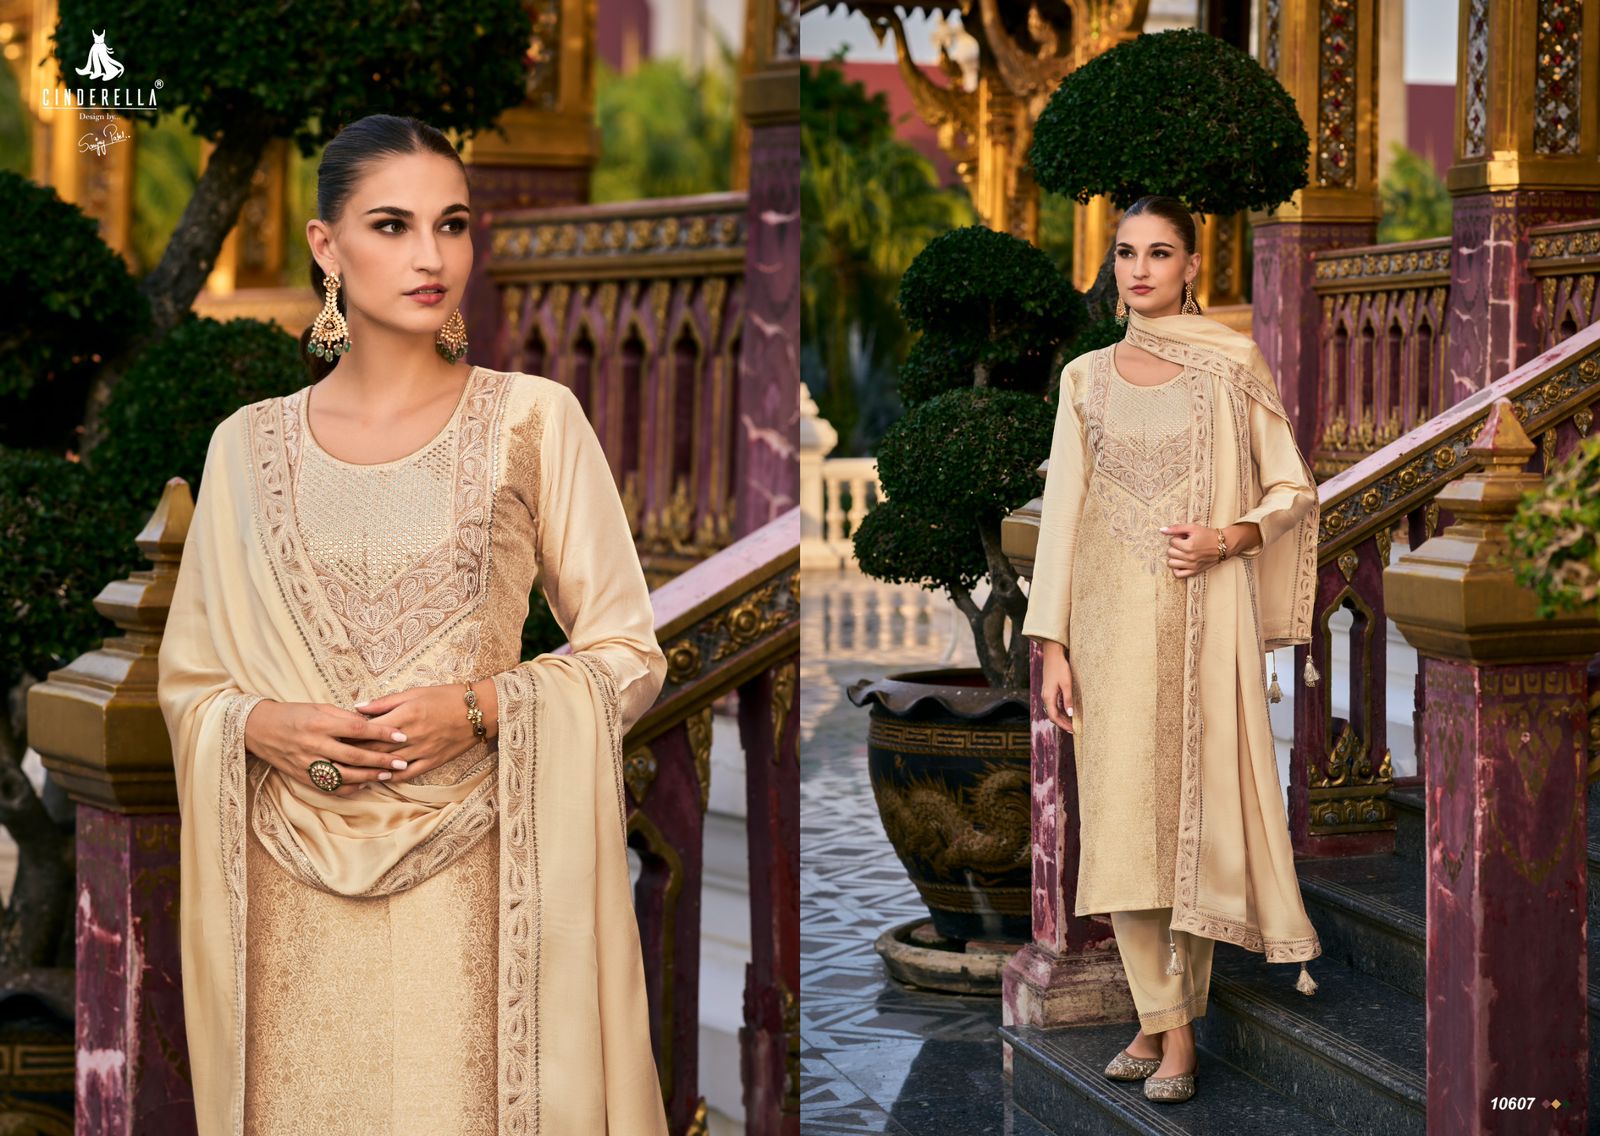 Kimkhab Cinderella Banarasi Silk Pant Style Suits